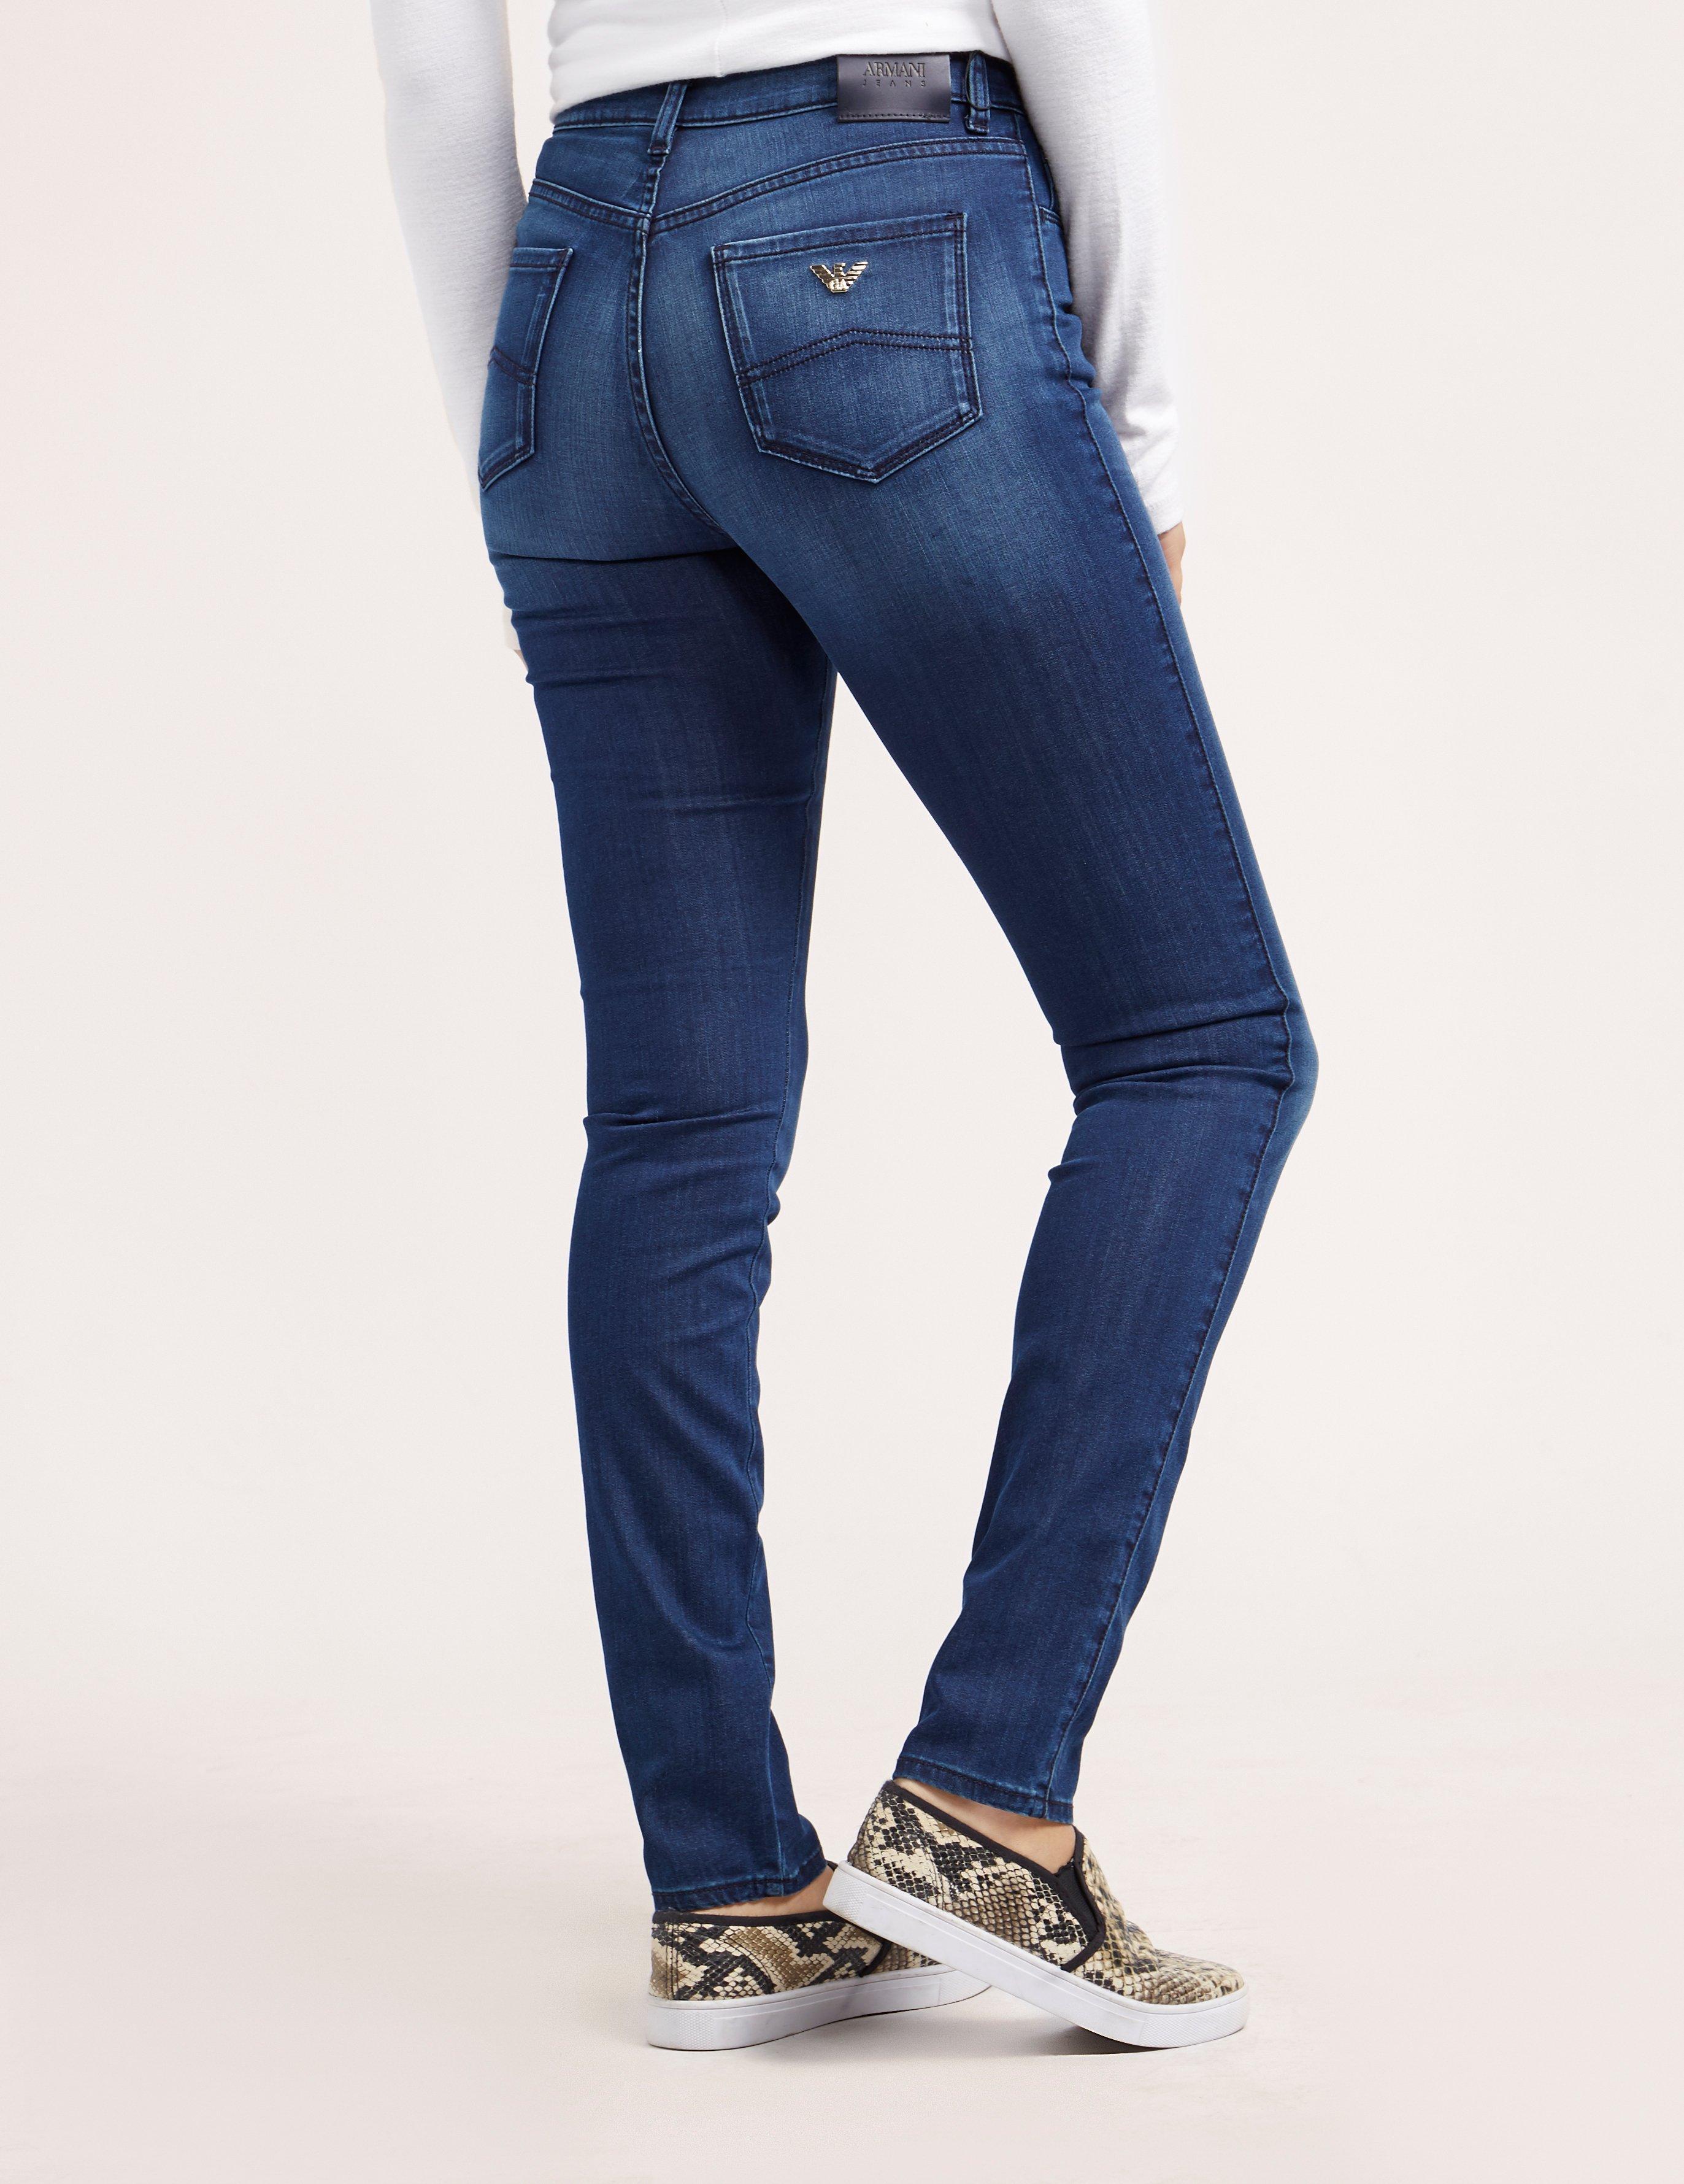 armani high waisted skinny jeans Off 57% - canerofset.com